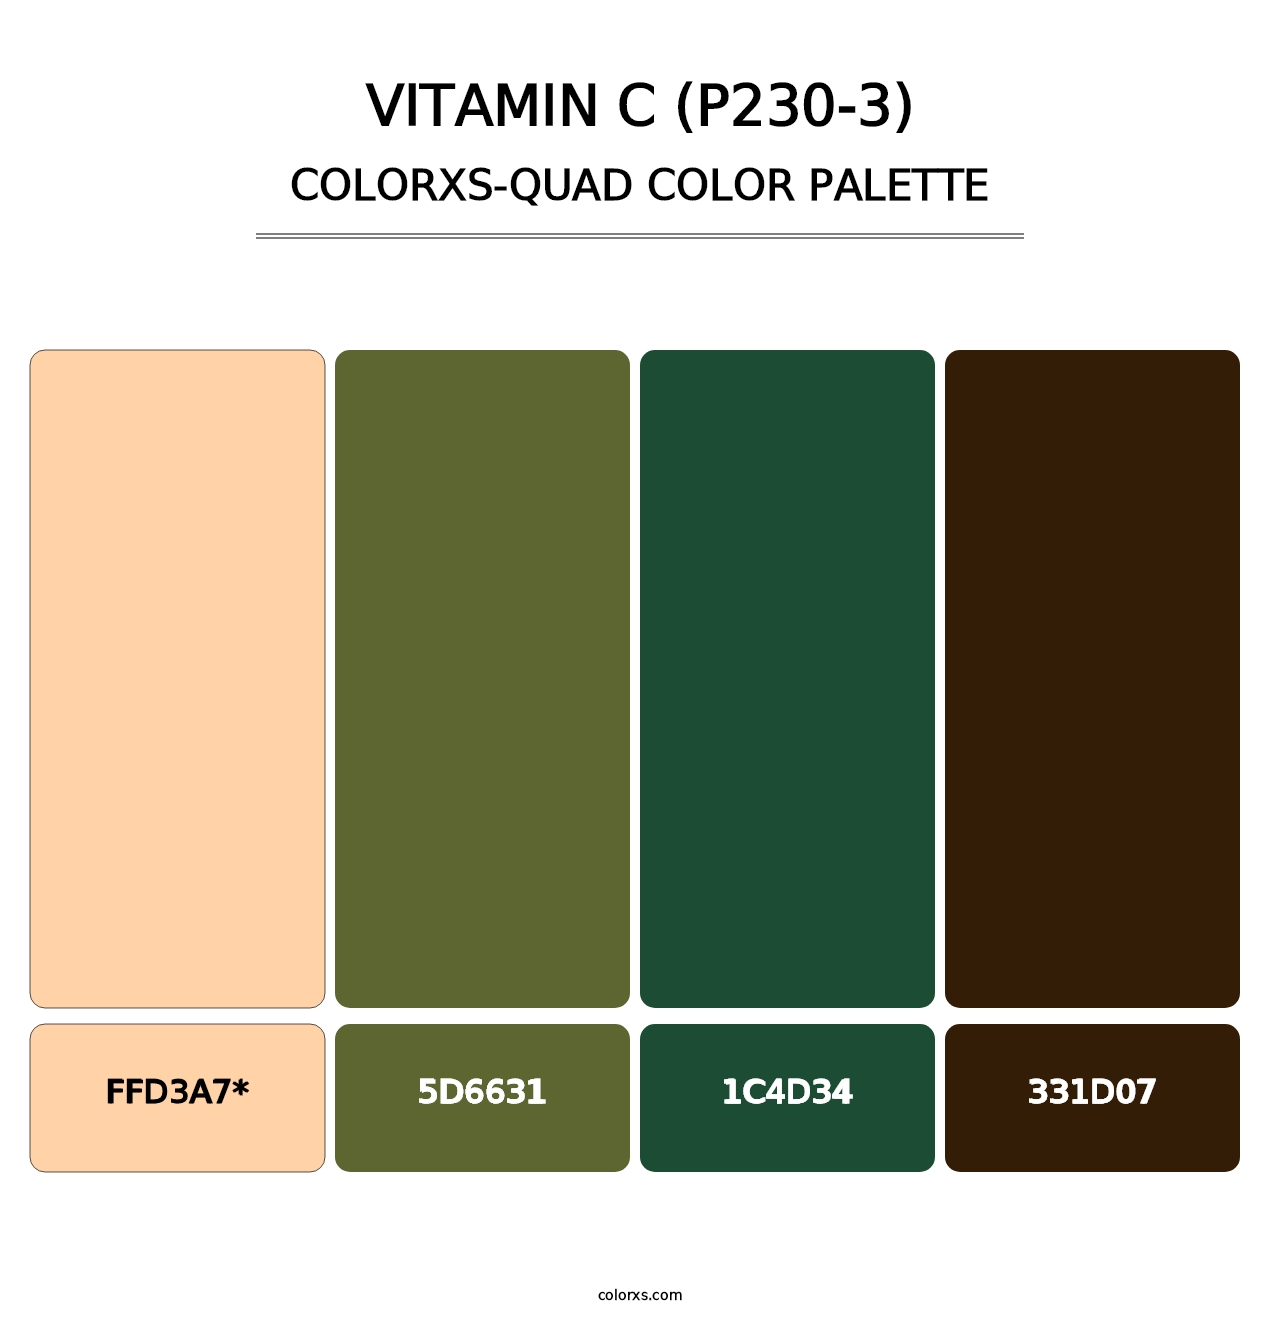 Vitamin C (P230-3) - Colorxs Quad Palette